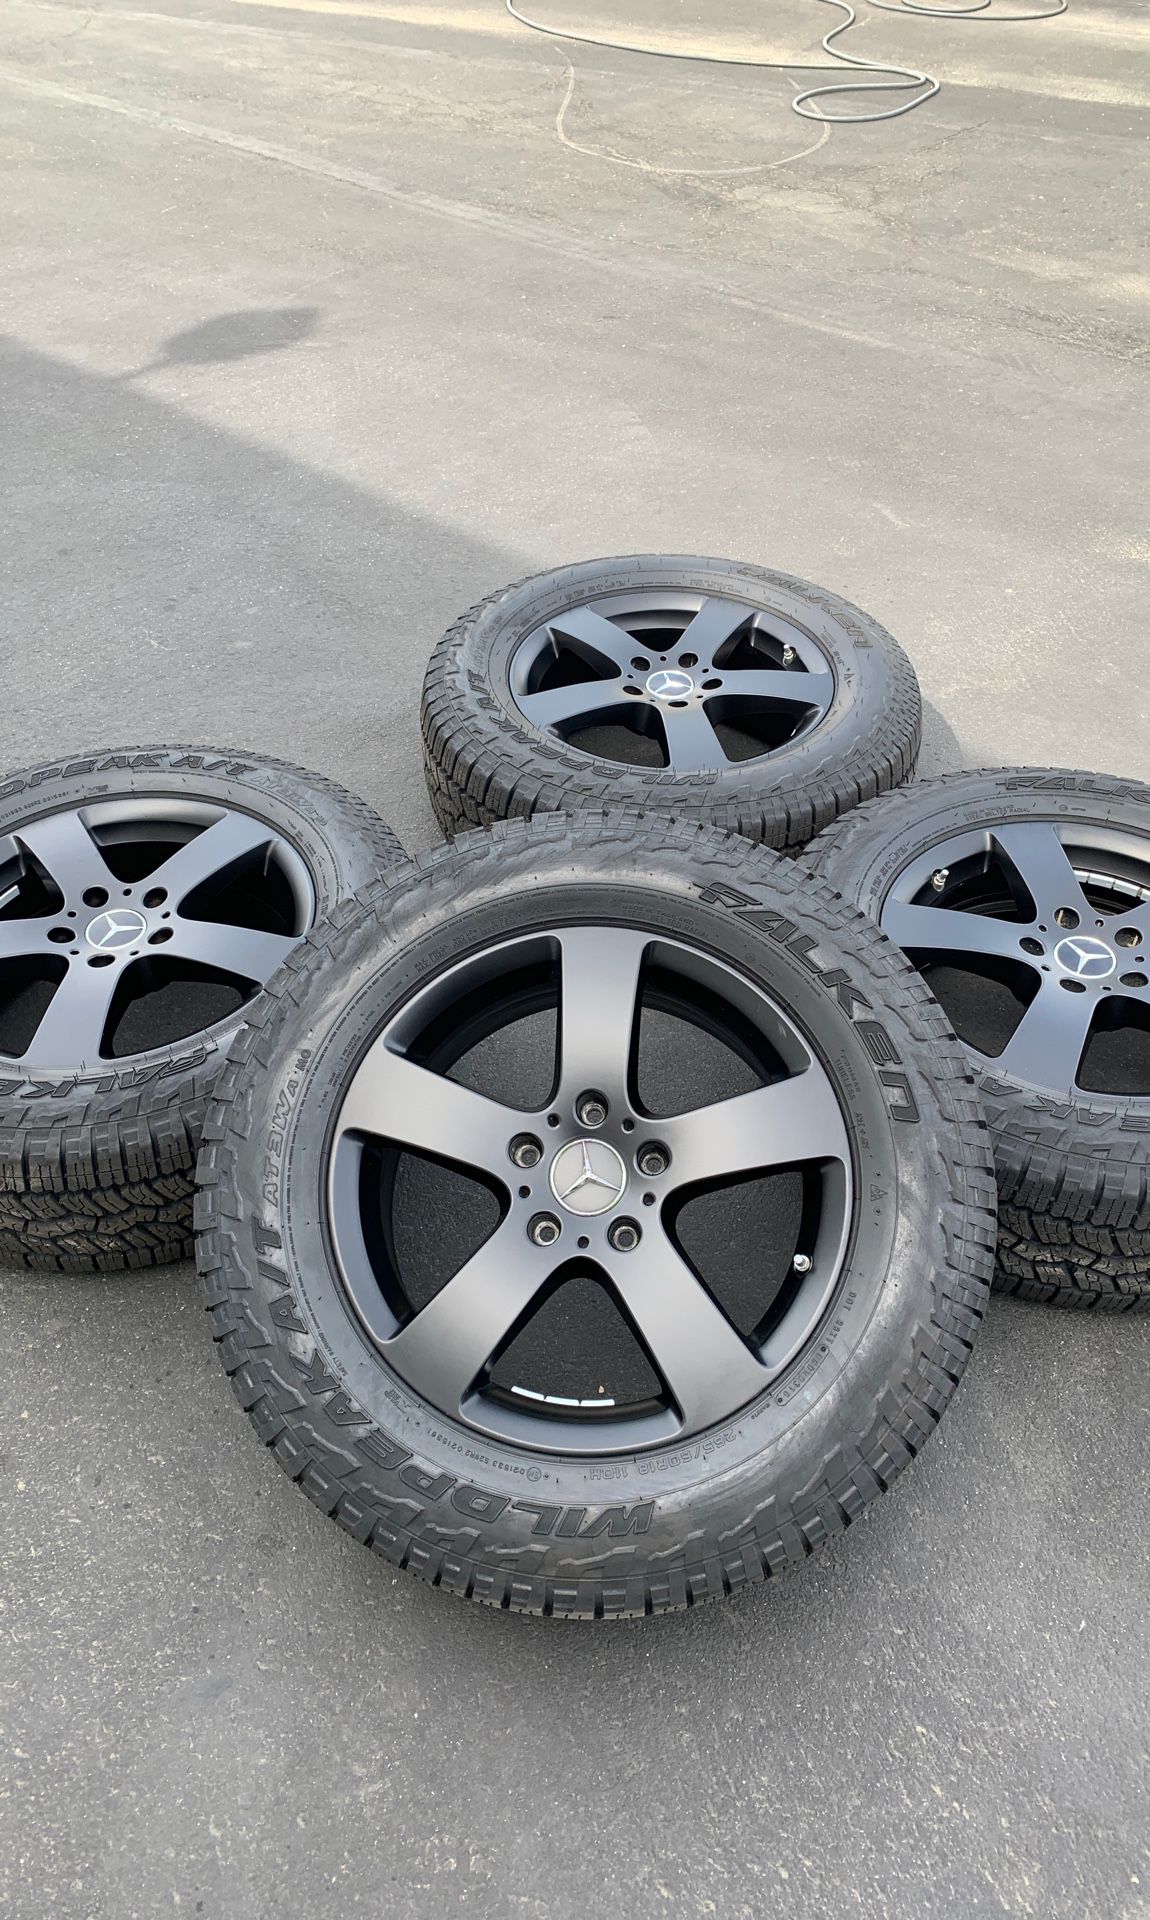 18” G-wagon 2019 wheels tires rims off road falken new tires wheels tpms 265/60/18 w463 4010900 g550 g500 g63 g wagon 18